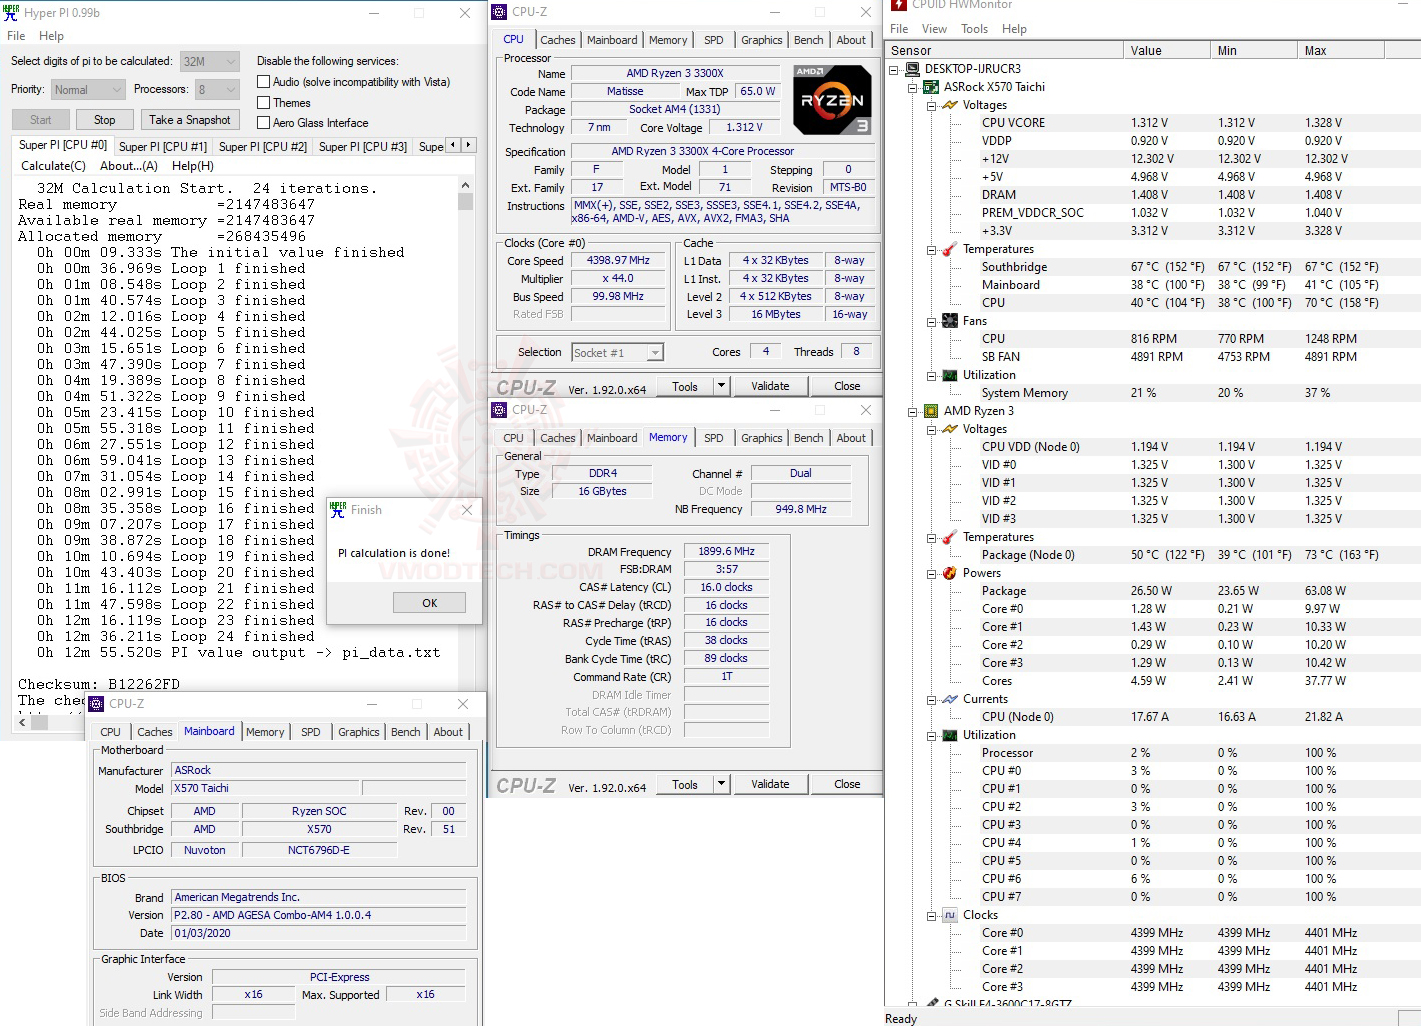 h32 oc AMD RYZEN 3 3300X PROCESSOR REVIEW